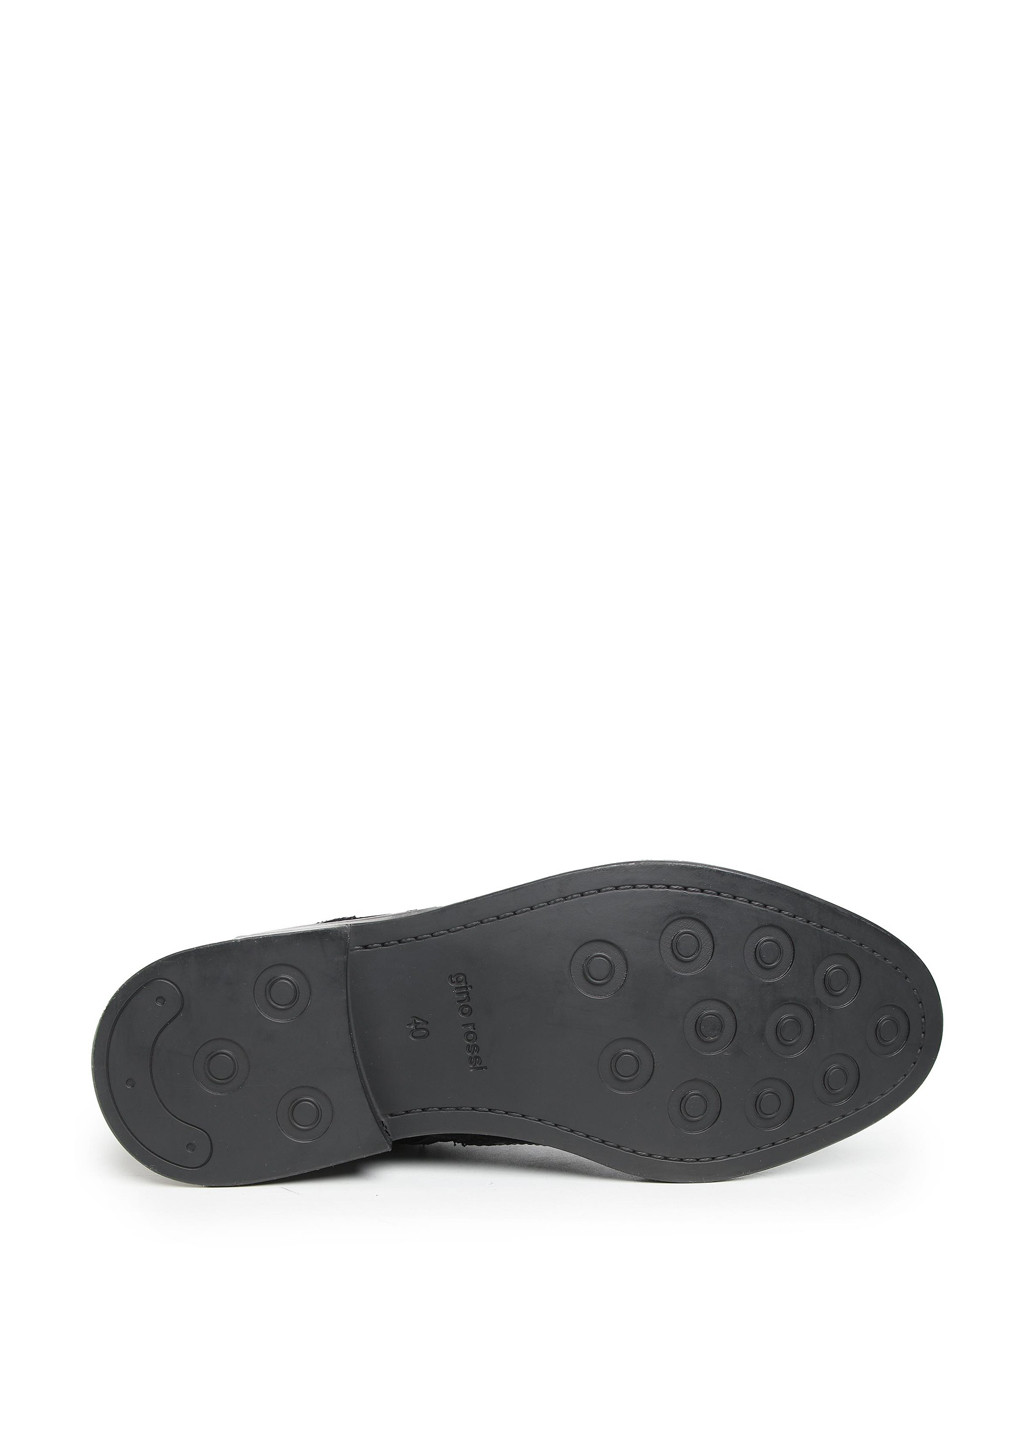 Черные осенние черевики gino rossi mi07-a962-a791-27 Gino Rossi